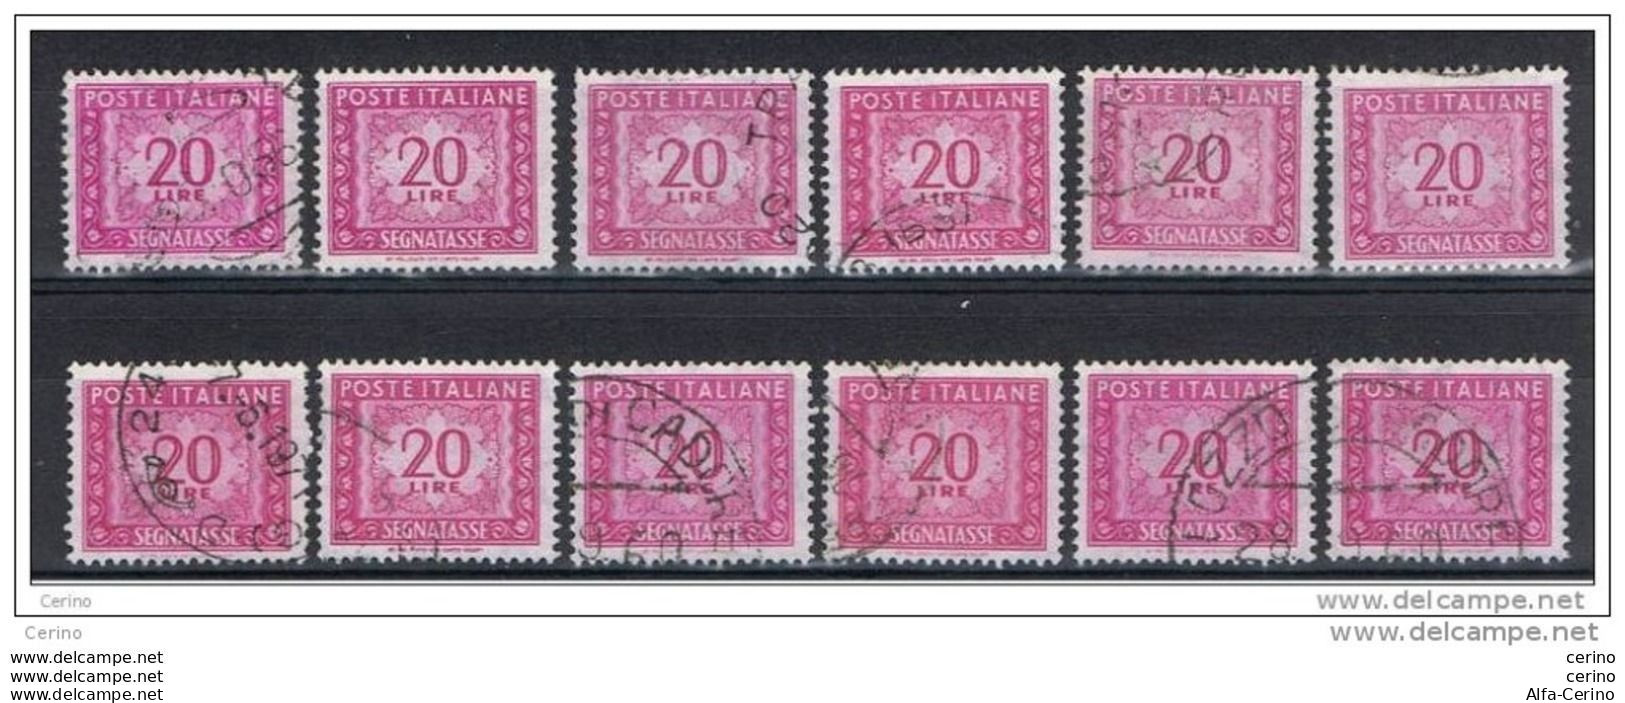 REPUBBLICA:  1955/81  TASSE  ST. -  £. 20  LILLA  ROSA  US. -  RIPETUTO  12  VOLTE  -  SASS. 114 - Taxe